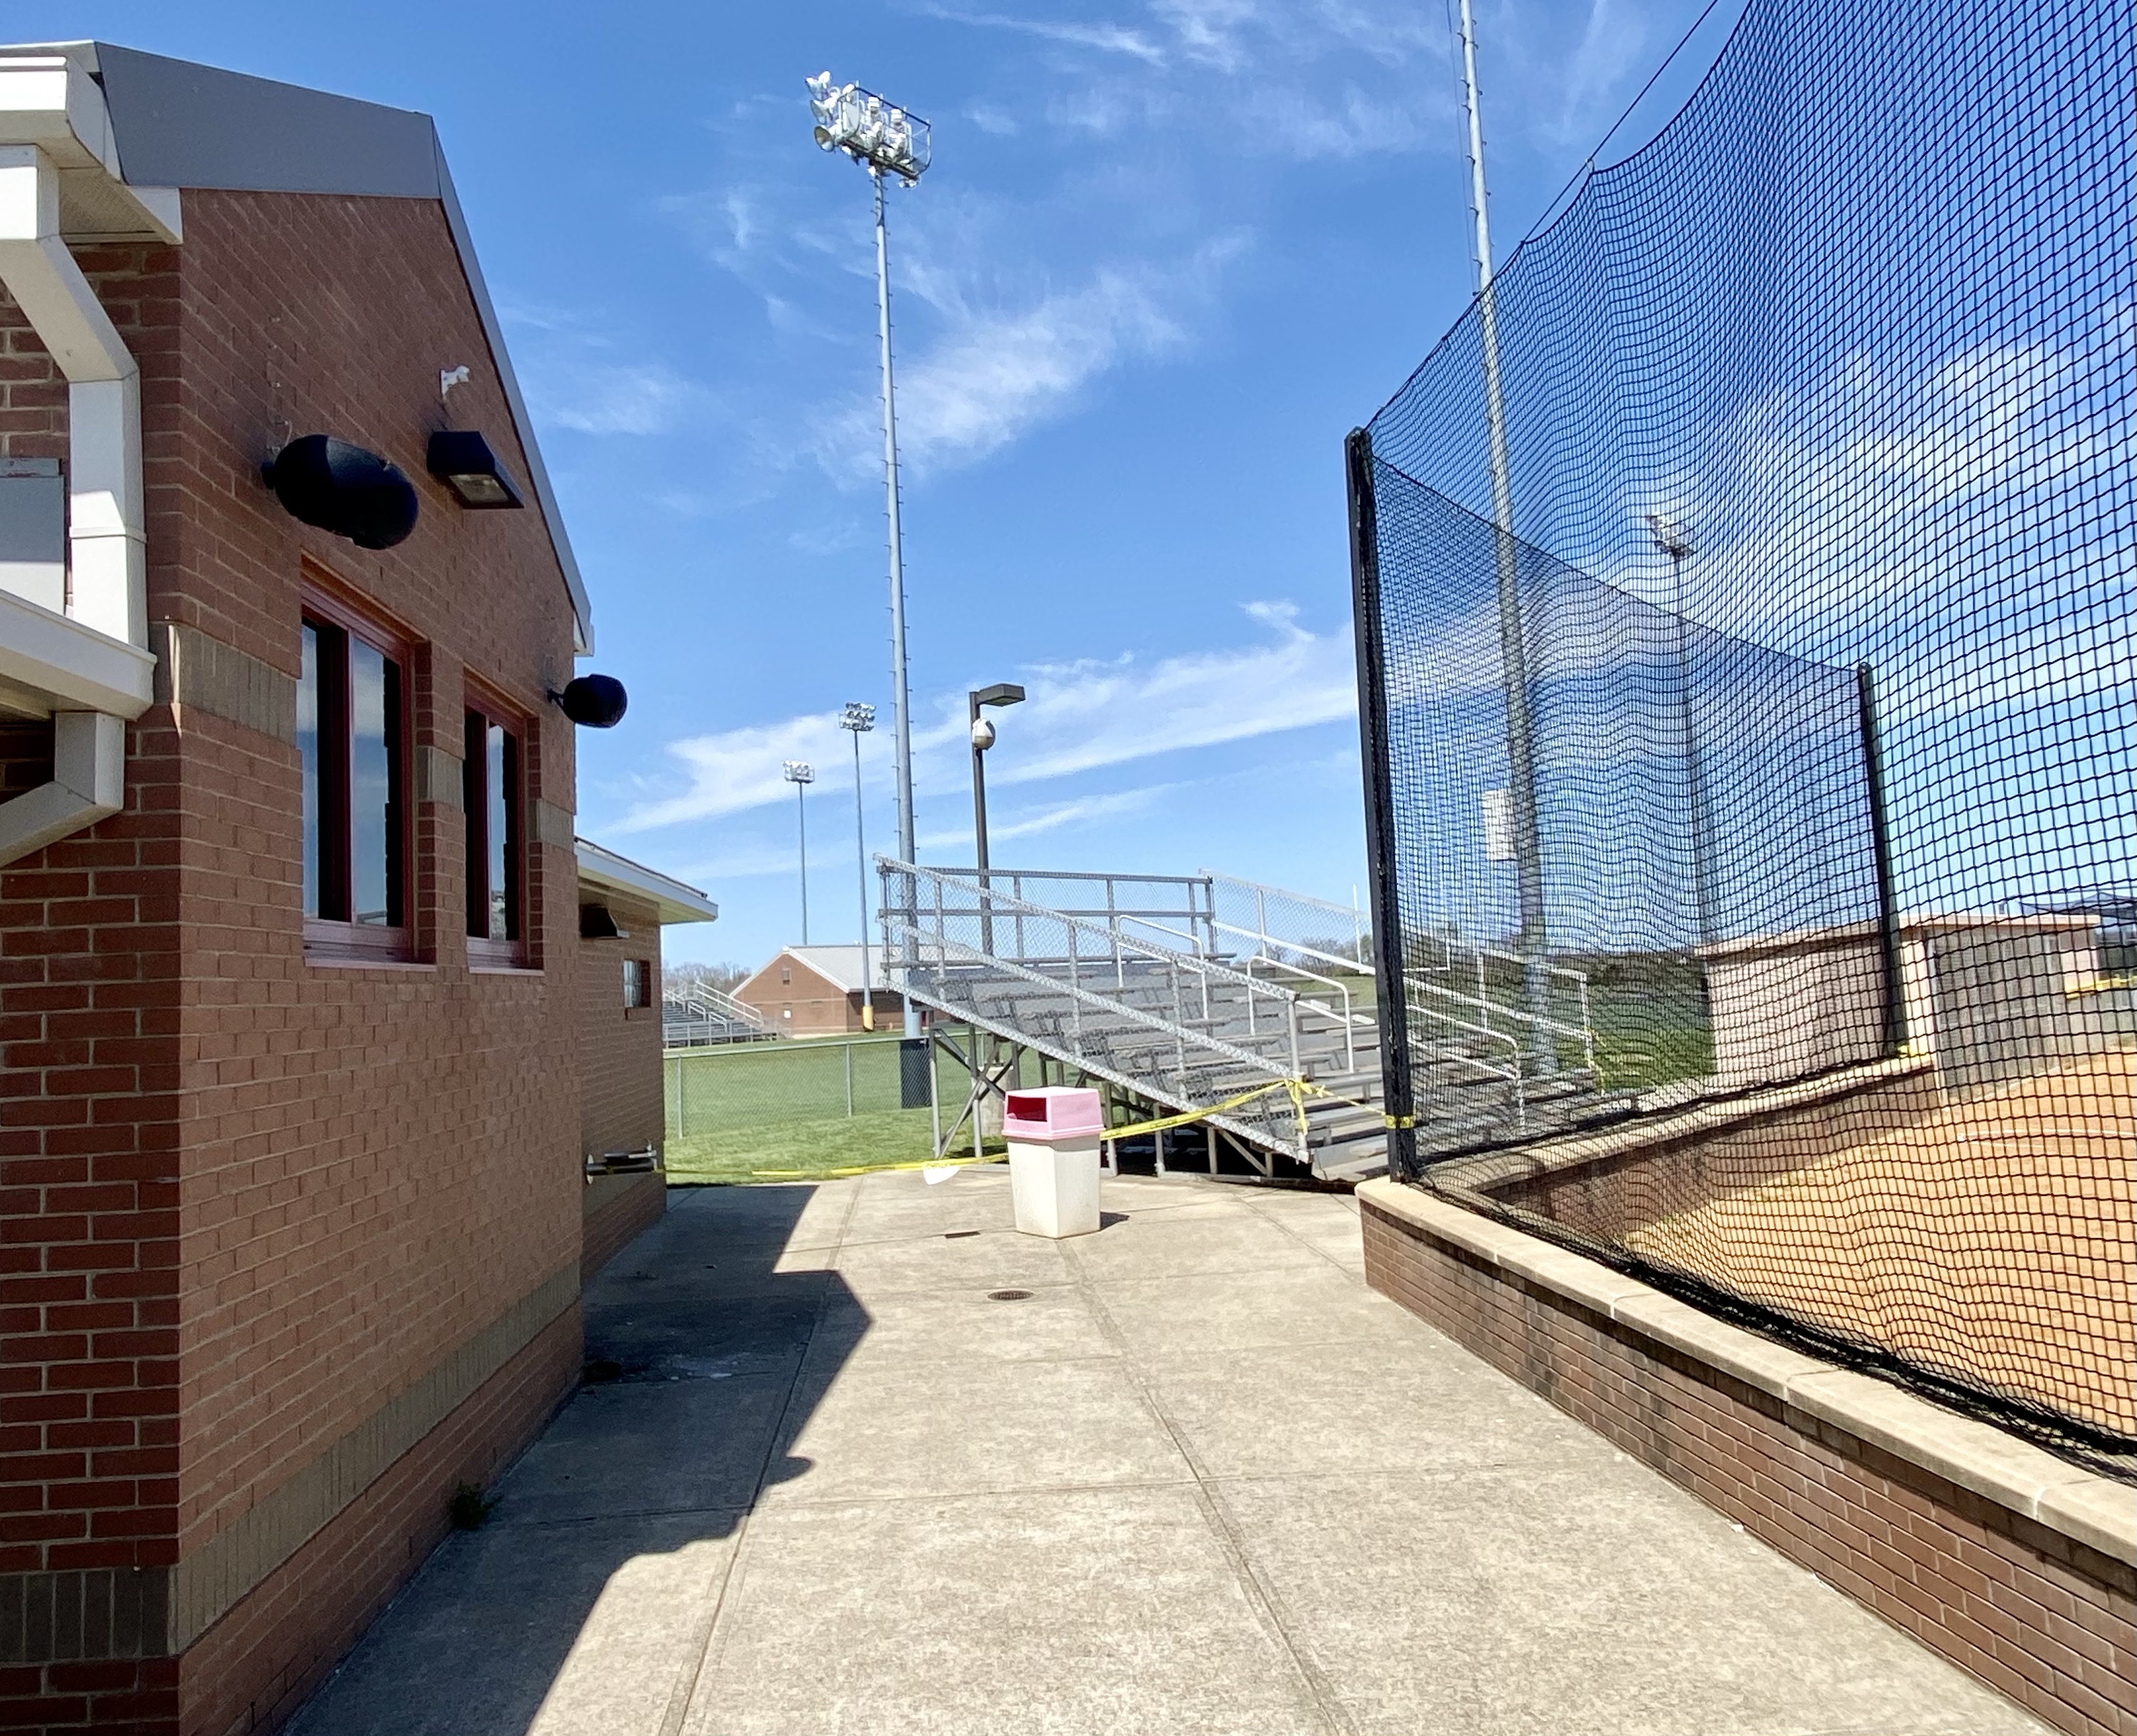 Michael Caudill Middle School Softball Sound System Installation • Richmond, Kentucky